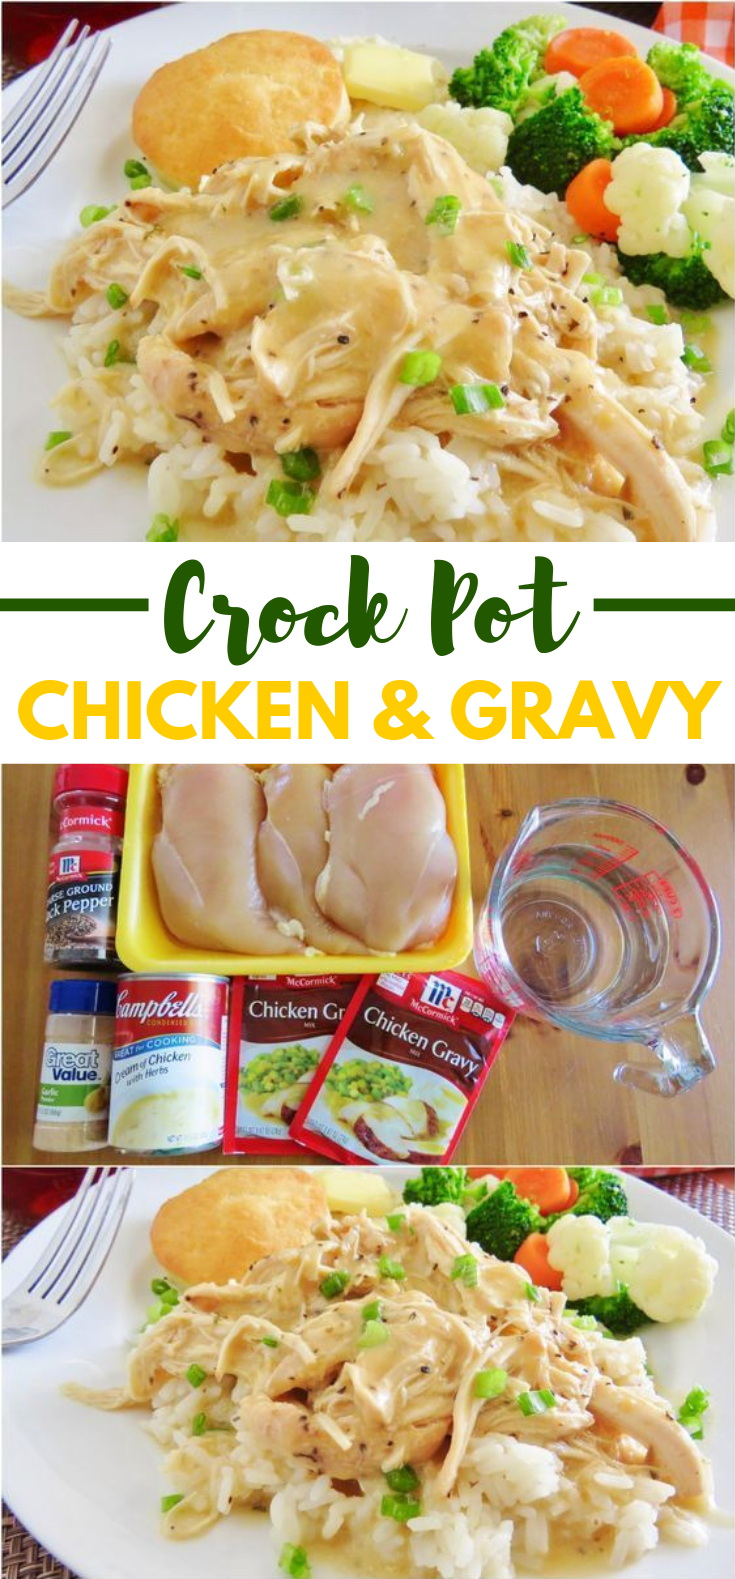 Crock Pot Chicken and Gravy #dinner #chickenrecipe